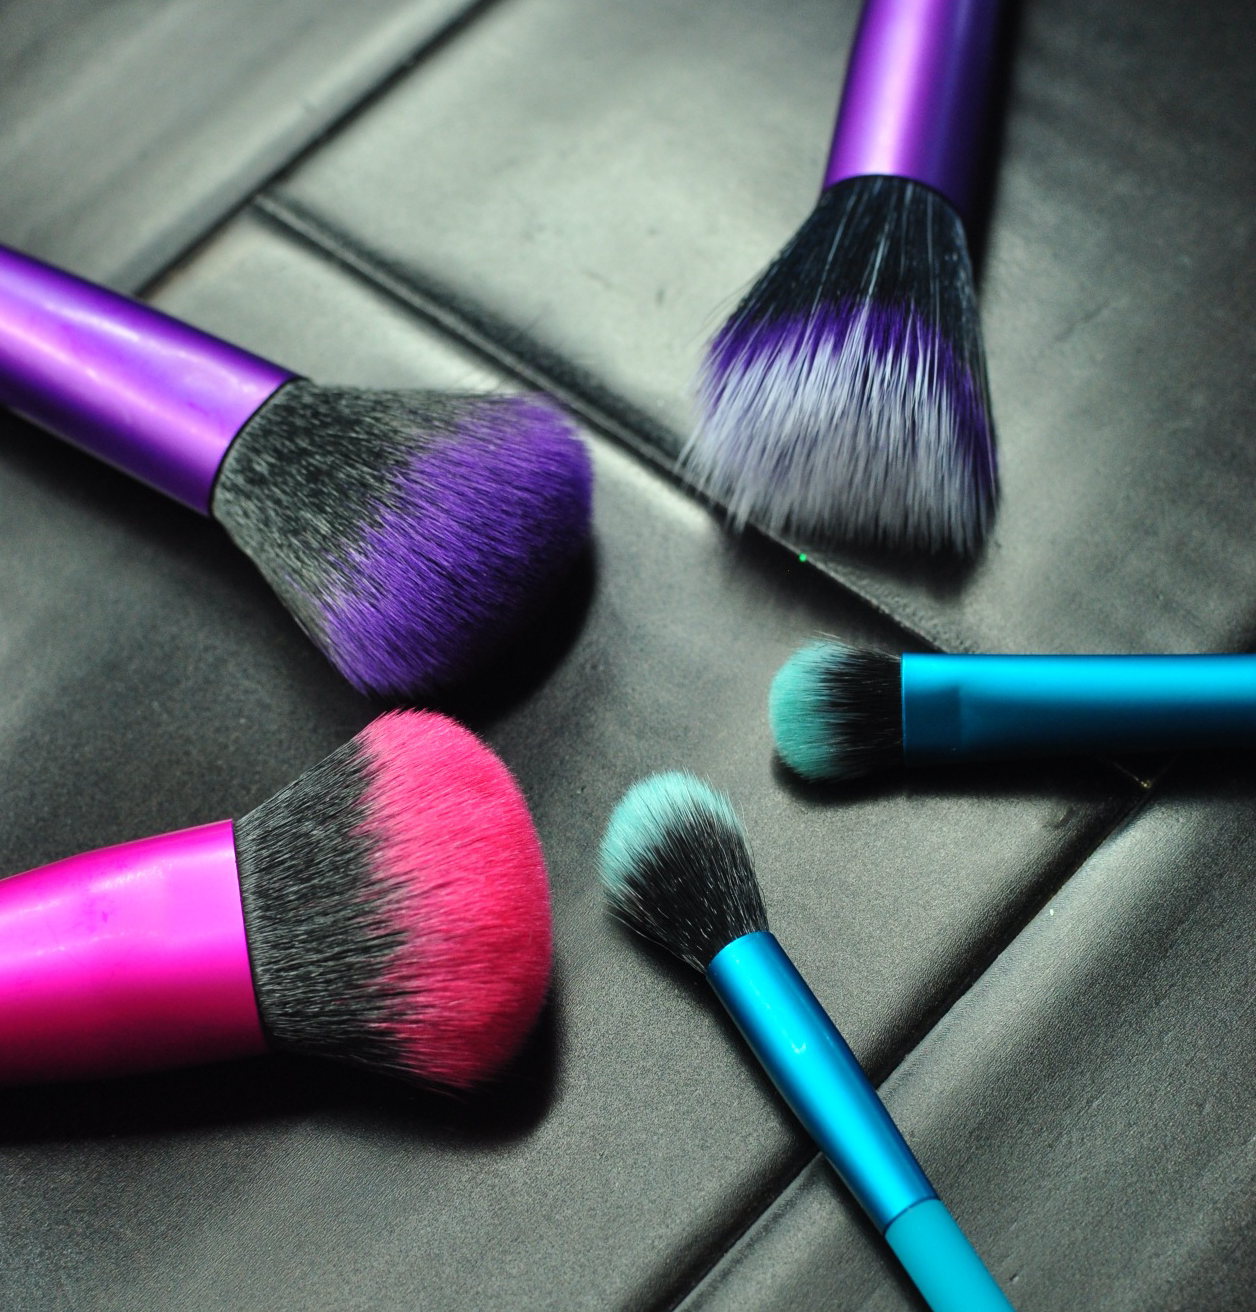 royal and langnickel makeup brushes review